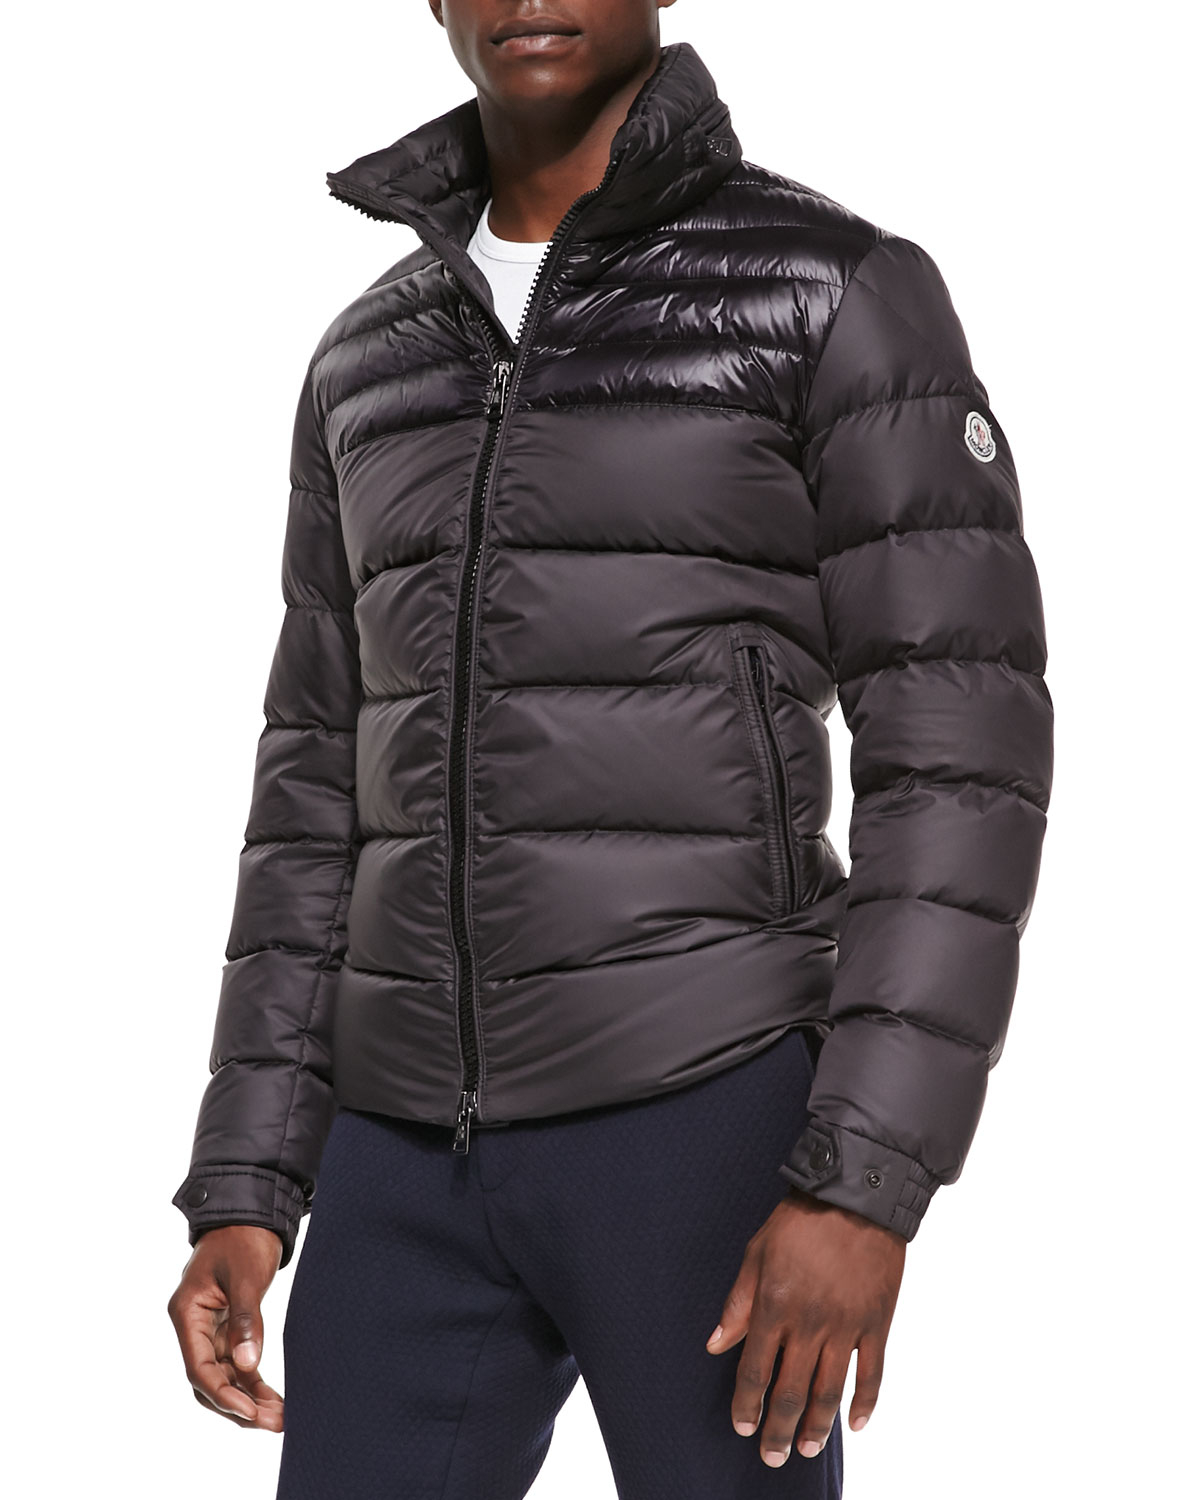 Lyst - Moncler Dinant Matte/Shiny Puffer Jacket in Black for Men